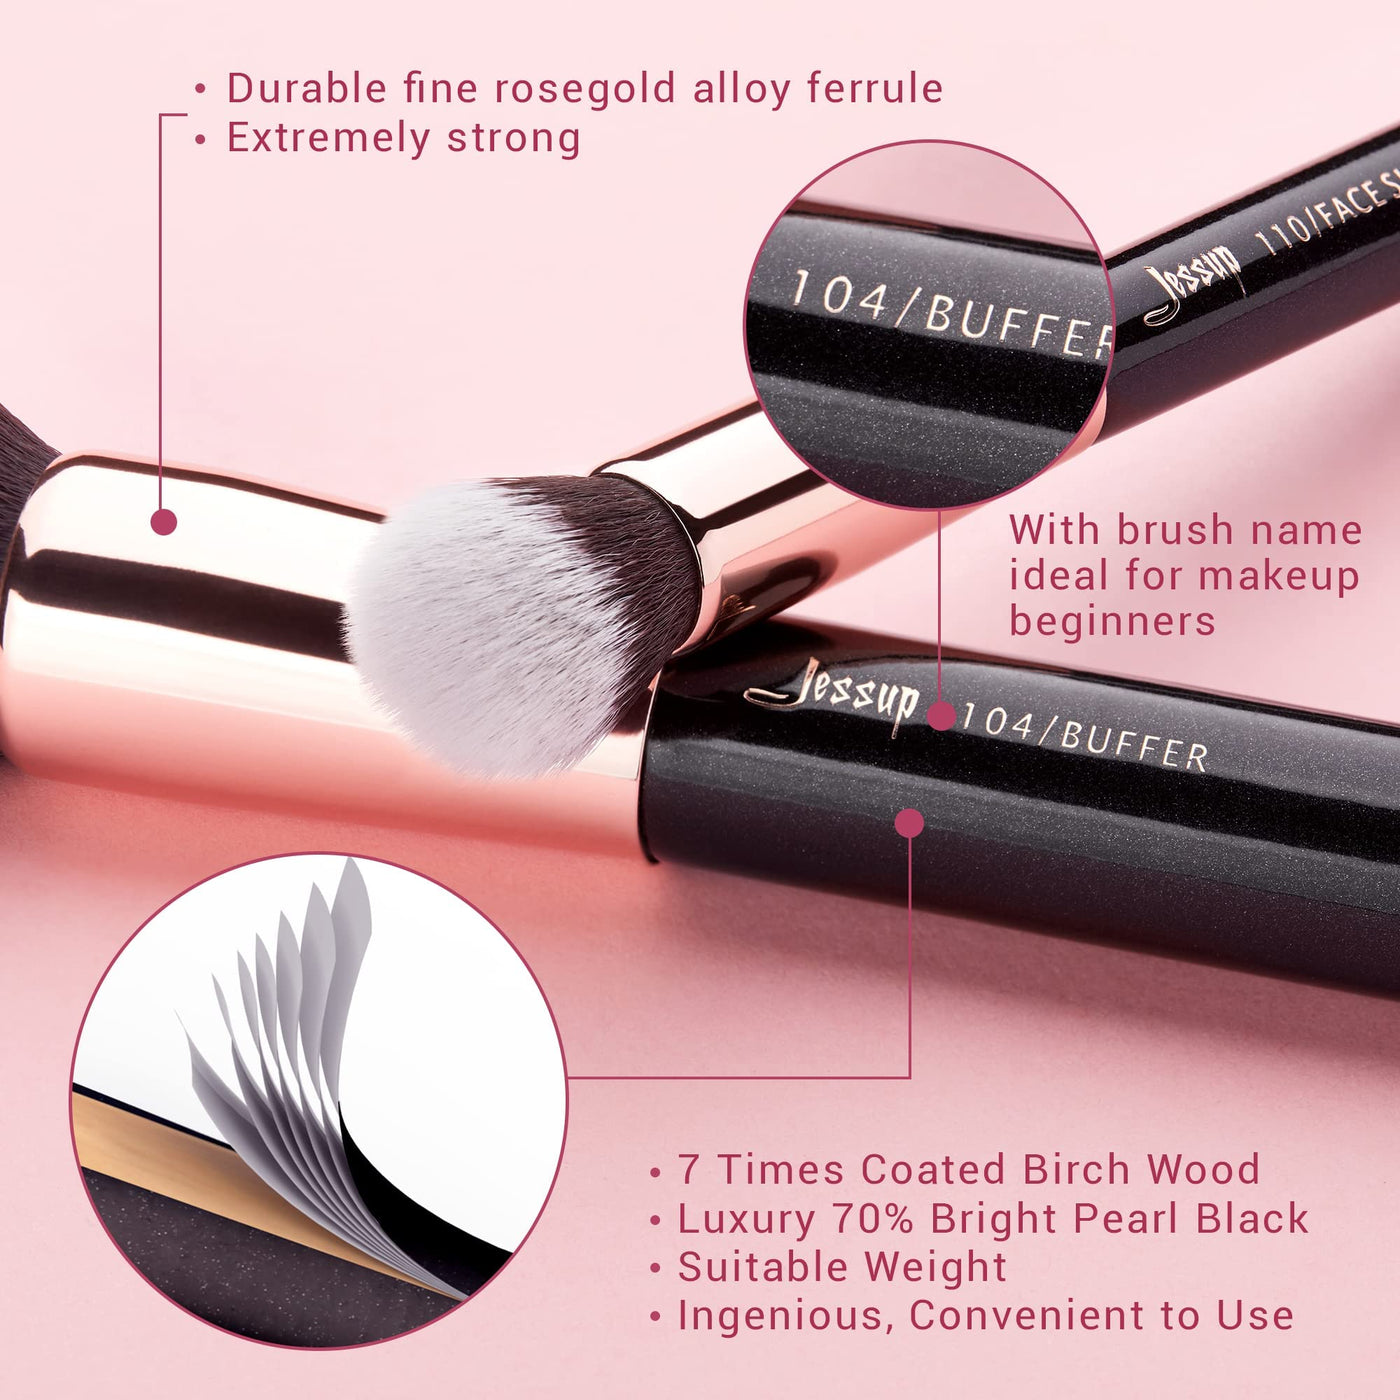 Jessup Brand 25pcs Professional Makeup Brush Set Beauty Cosmetic Foundation Powe